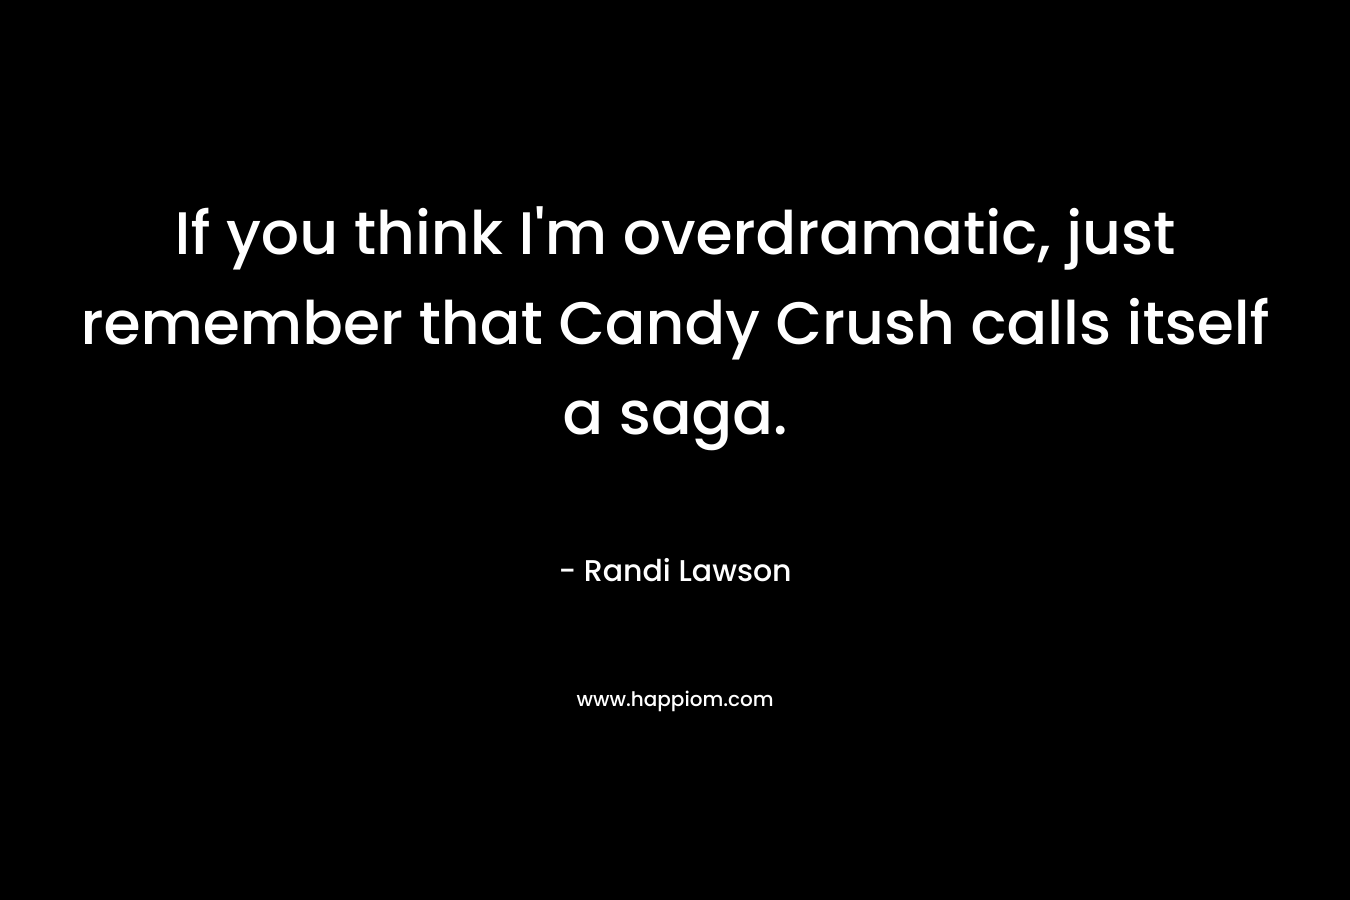 If you think I’m overdramatic, just remember that Candy Crush calls itself a saga. – Randi Lawson